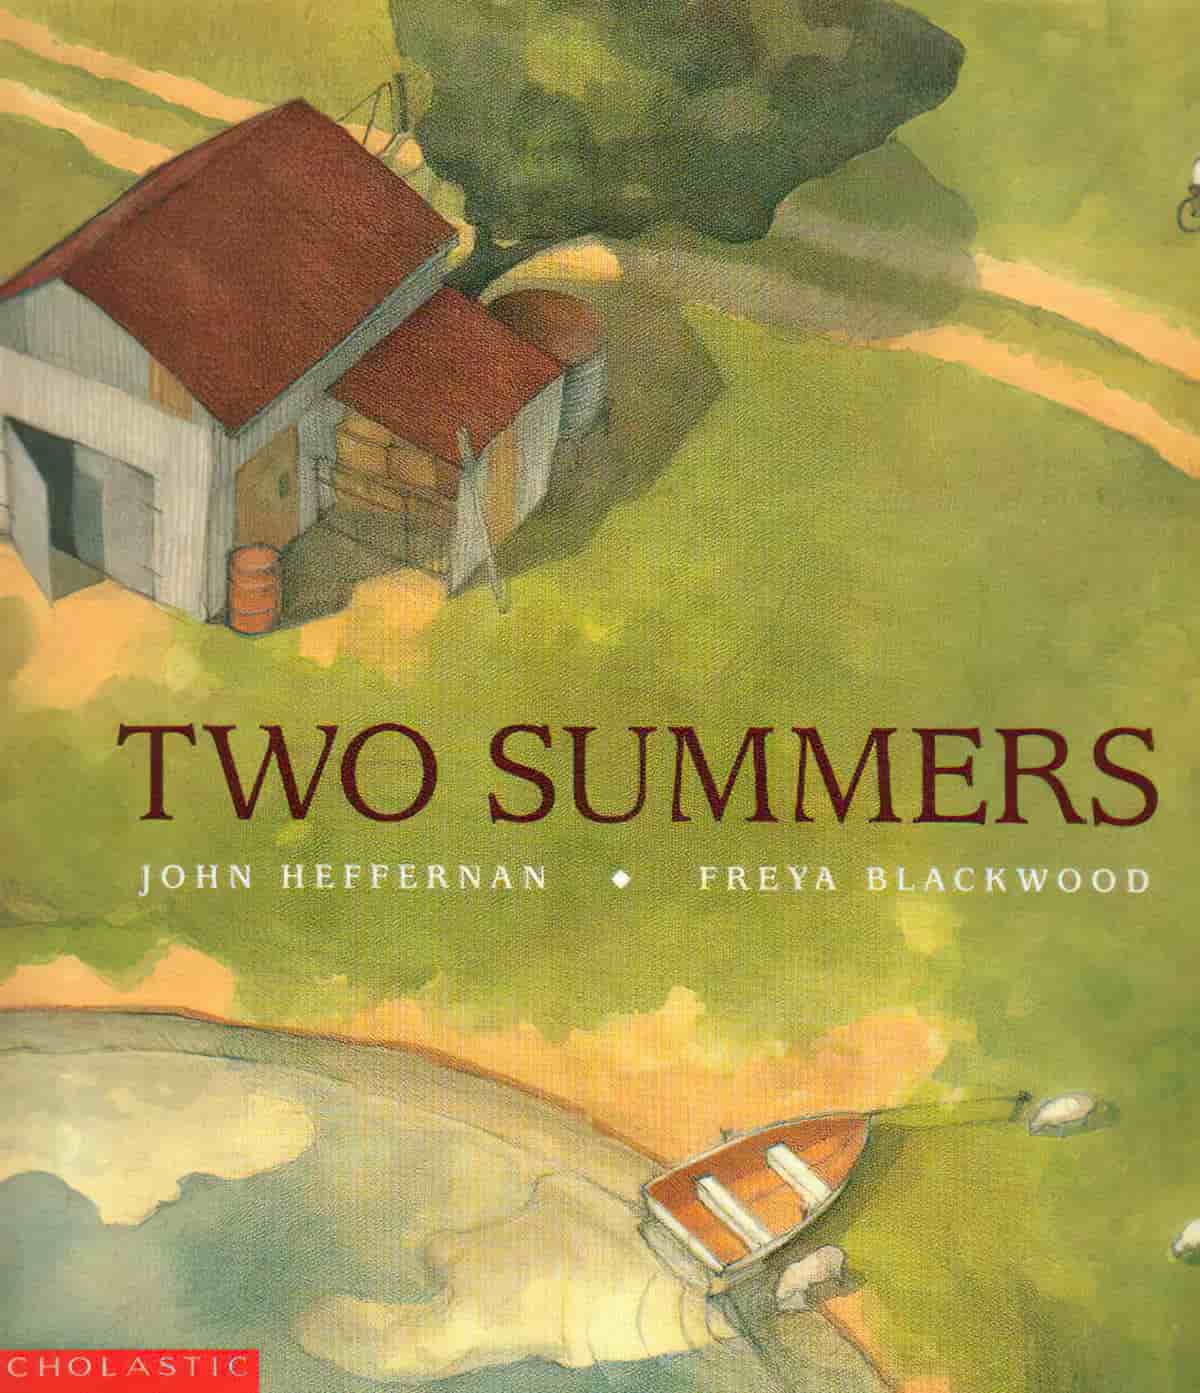 Two Summers by John Heffernan and Freya Blackwood Analysis